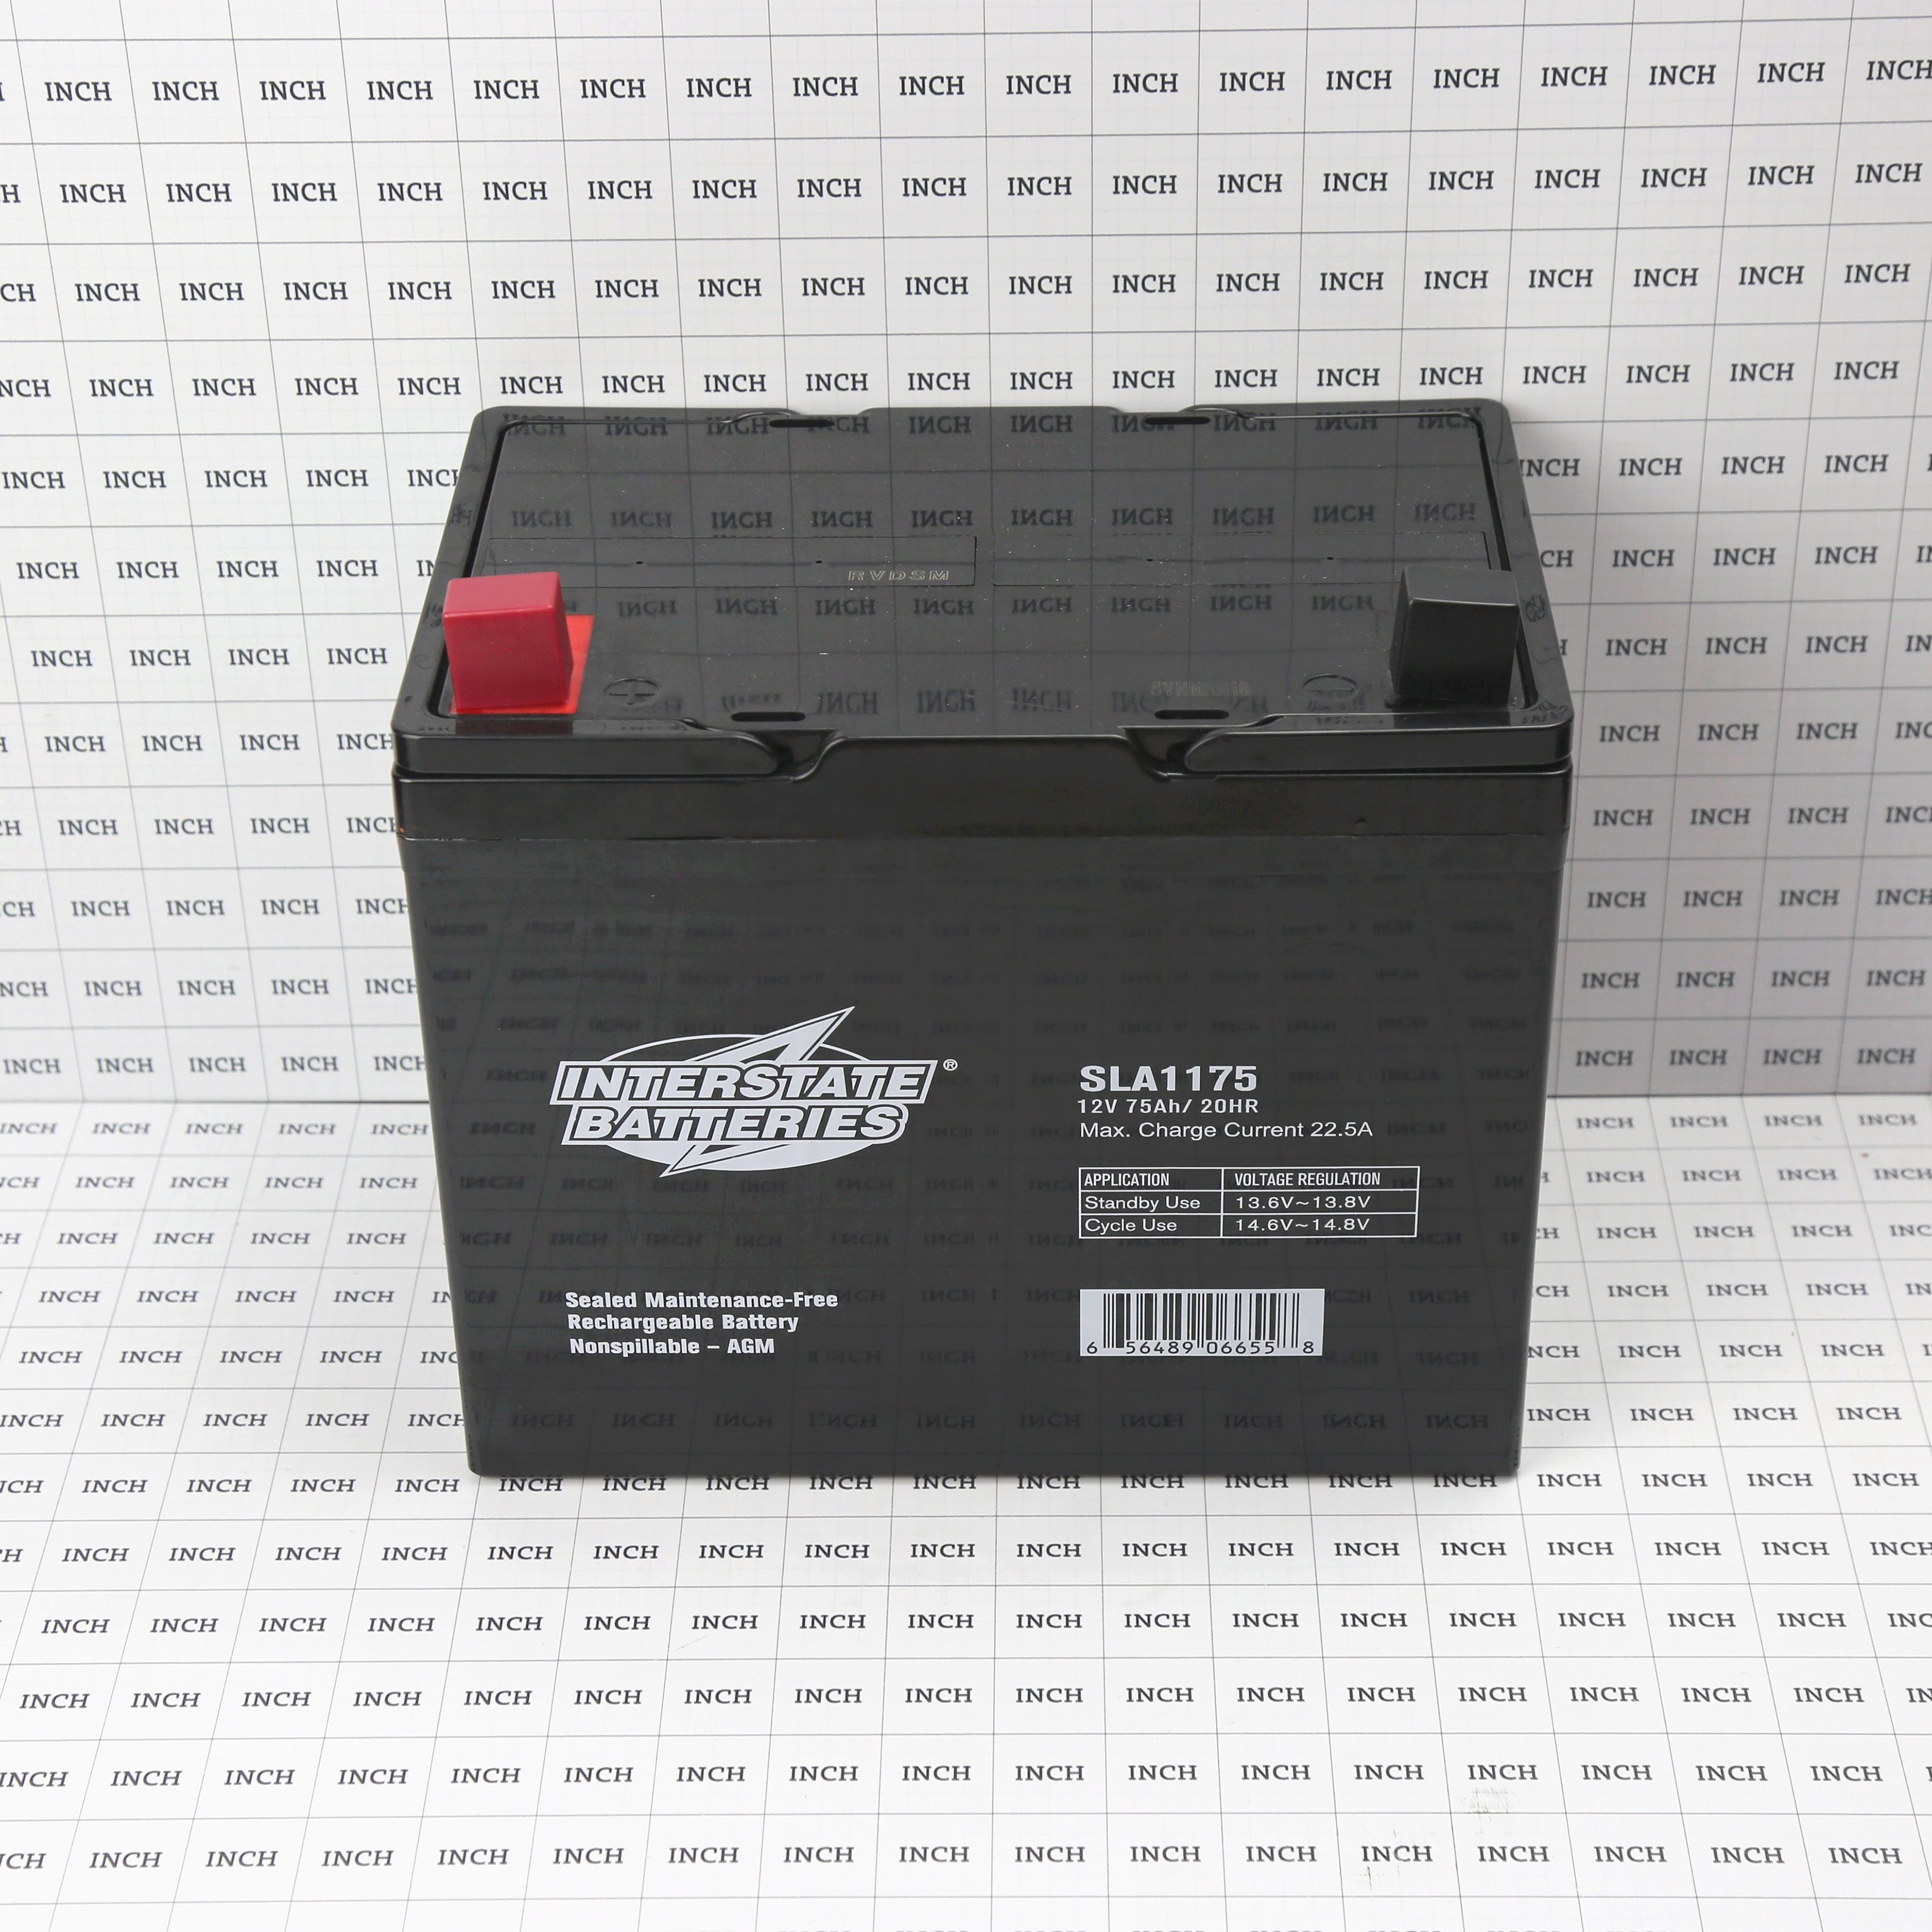 Batería Solar AGM SP160 De 160 Ah - Volta Baterias